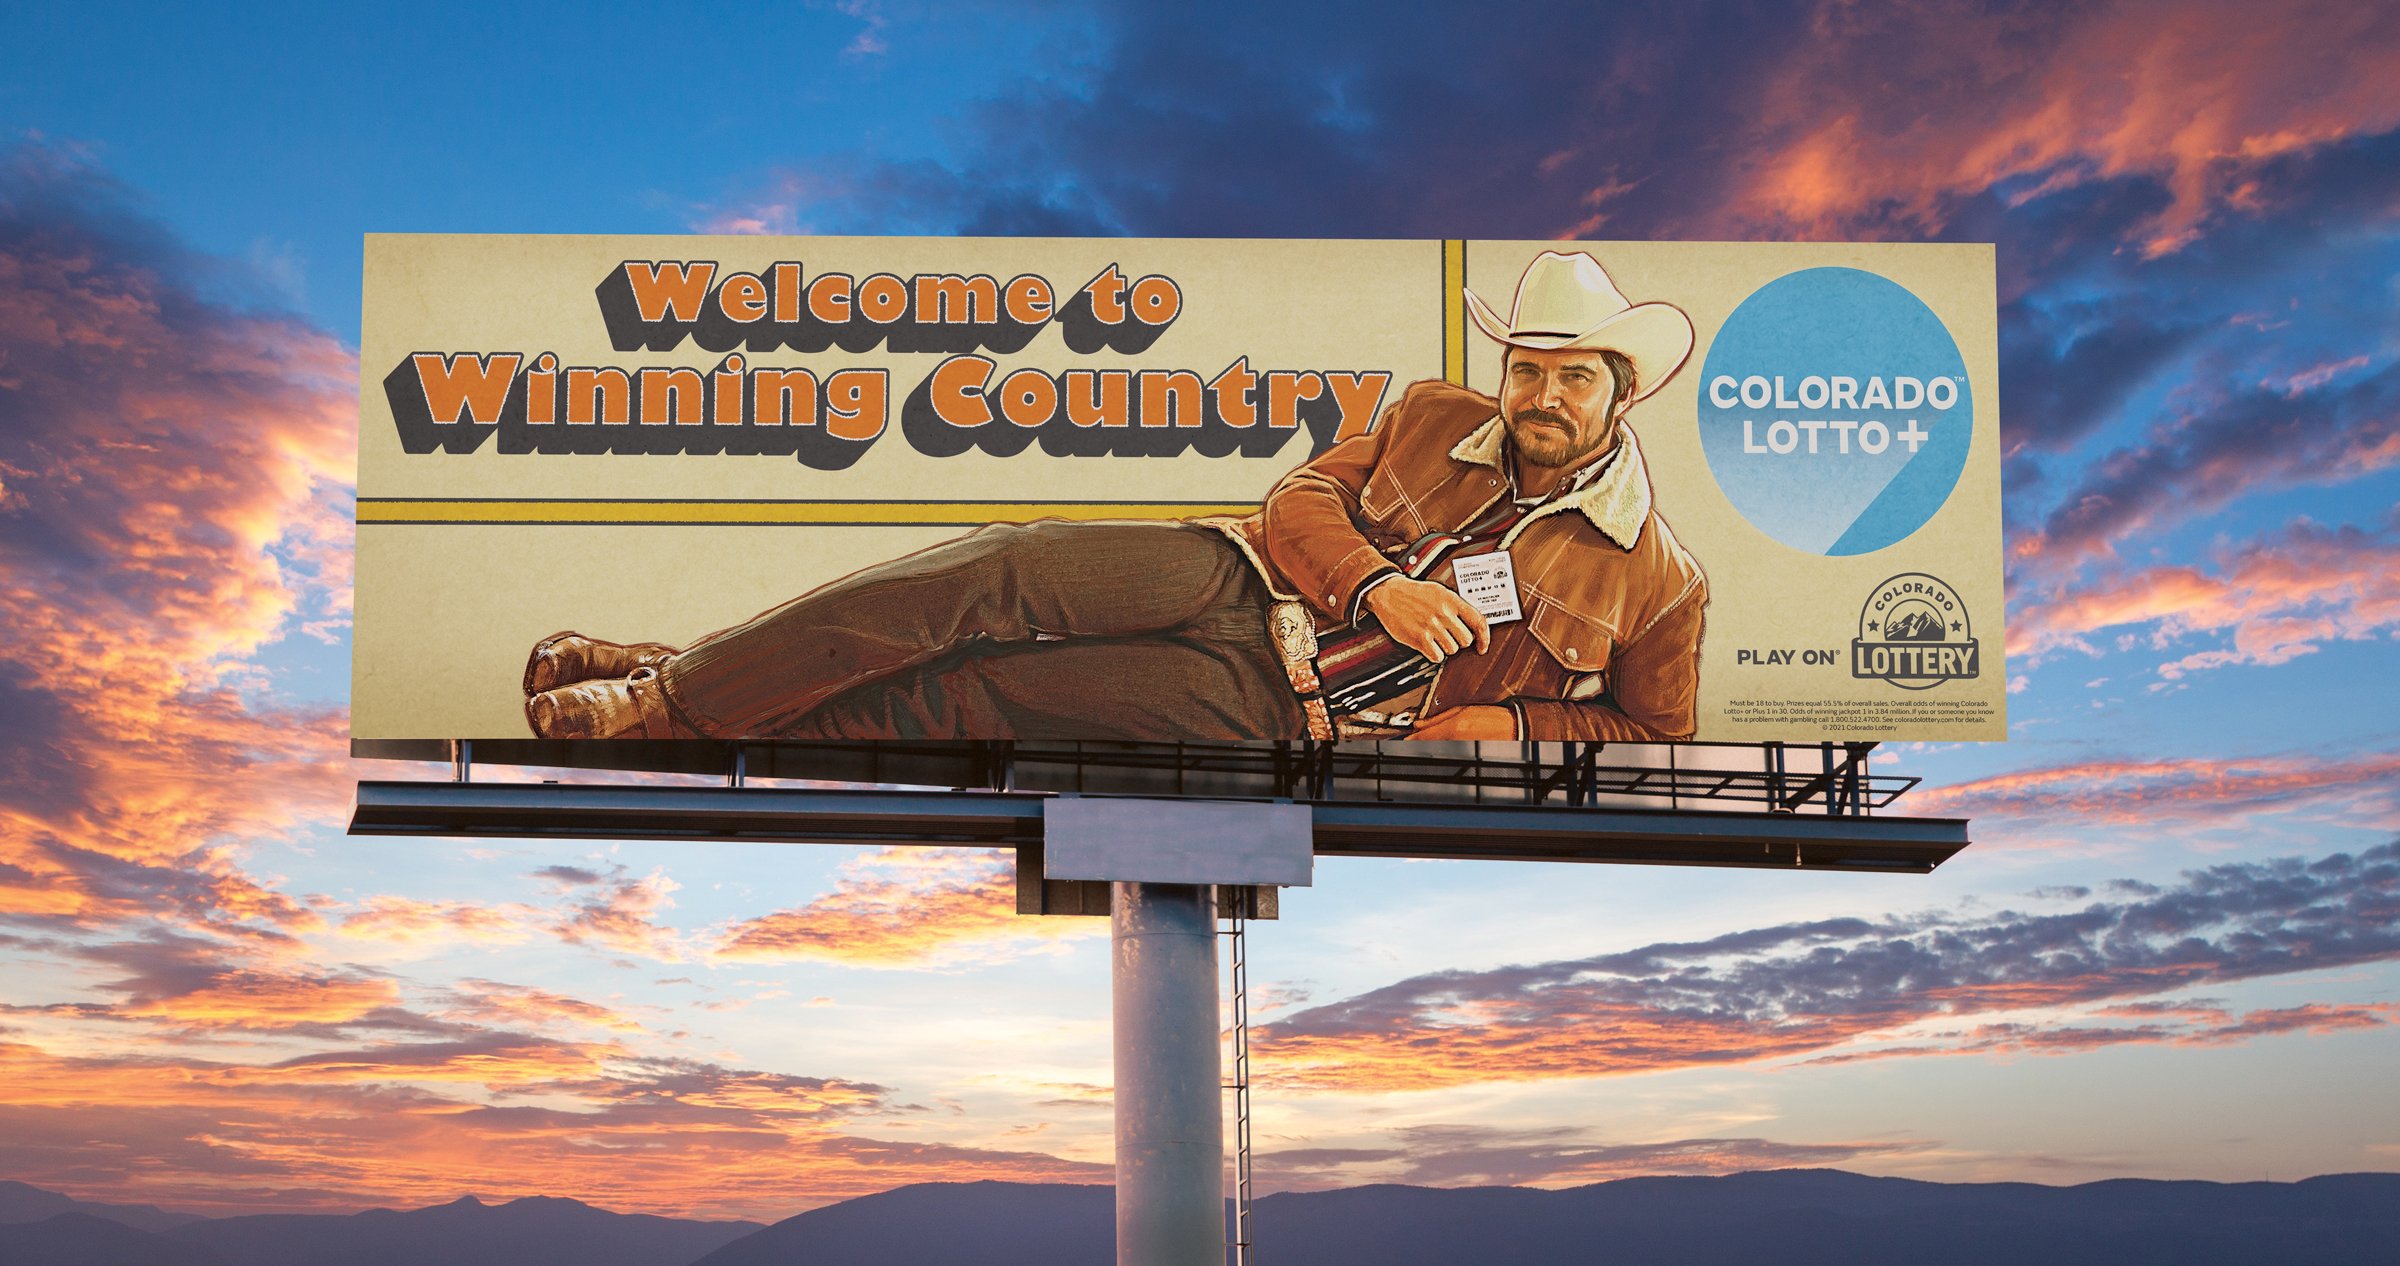 Colorado Lottery - Winning Country - OOH.jpg